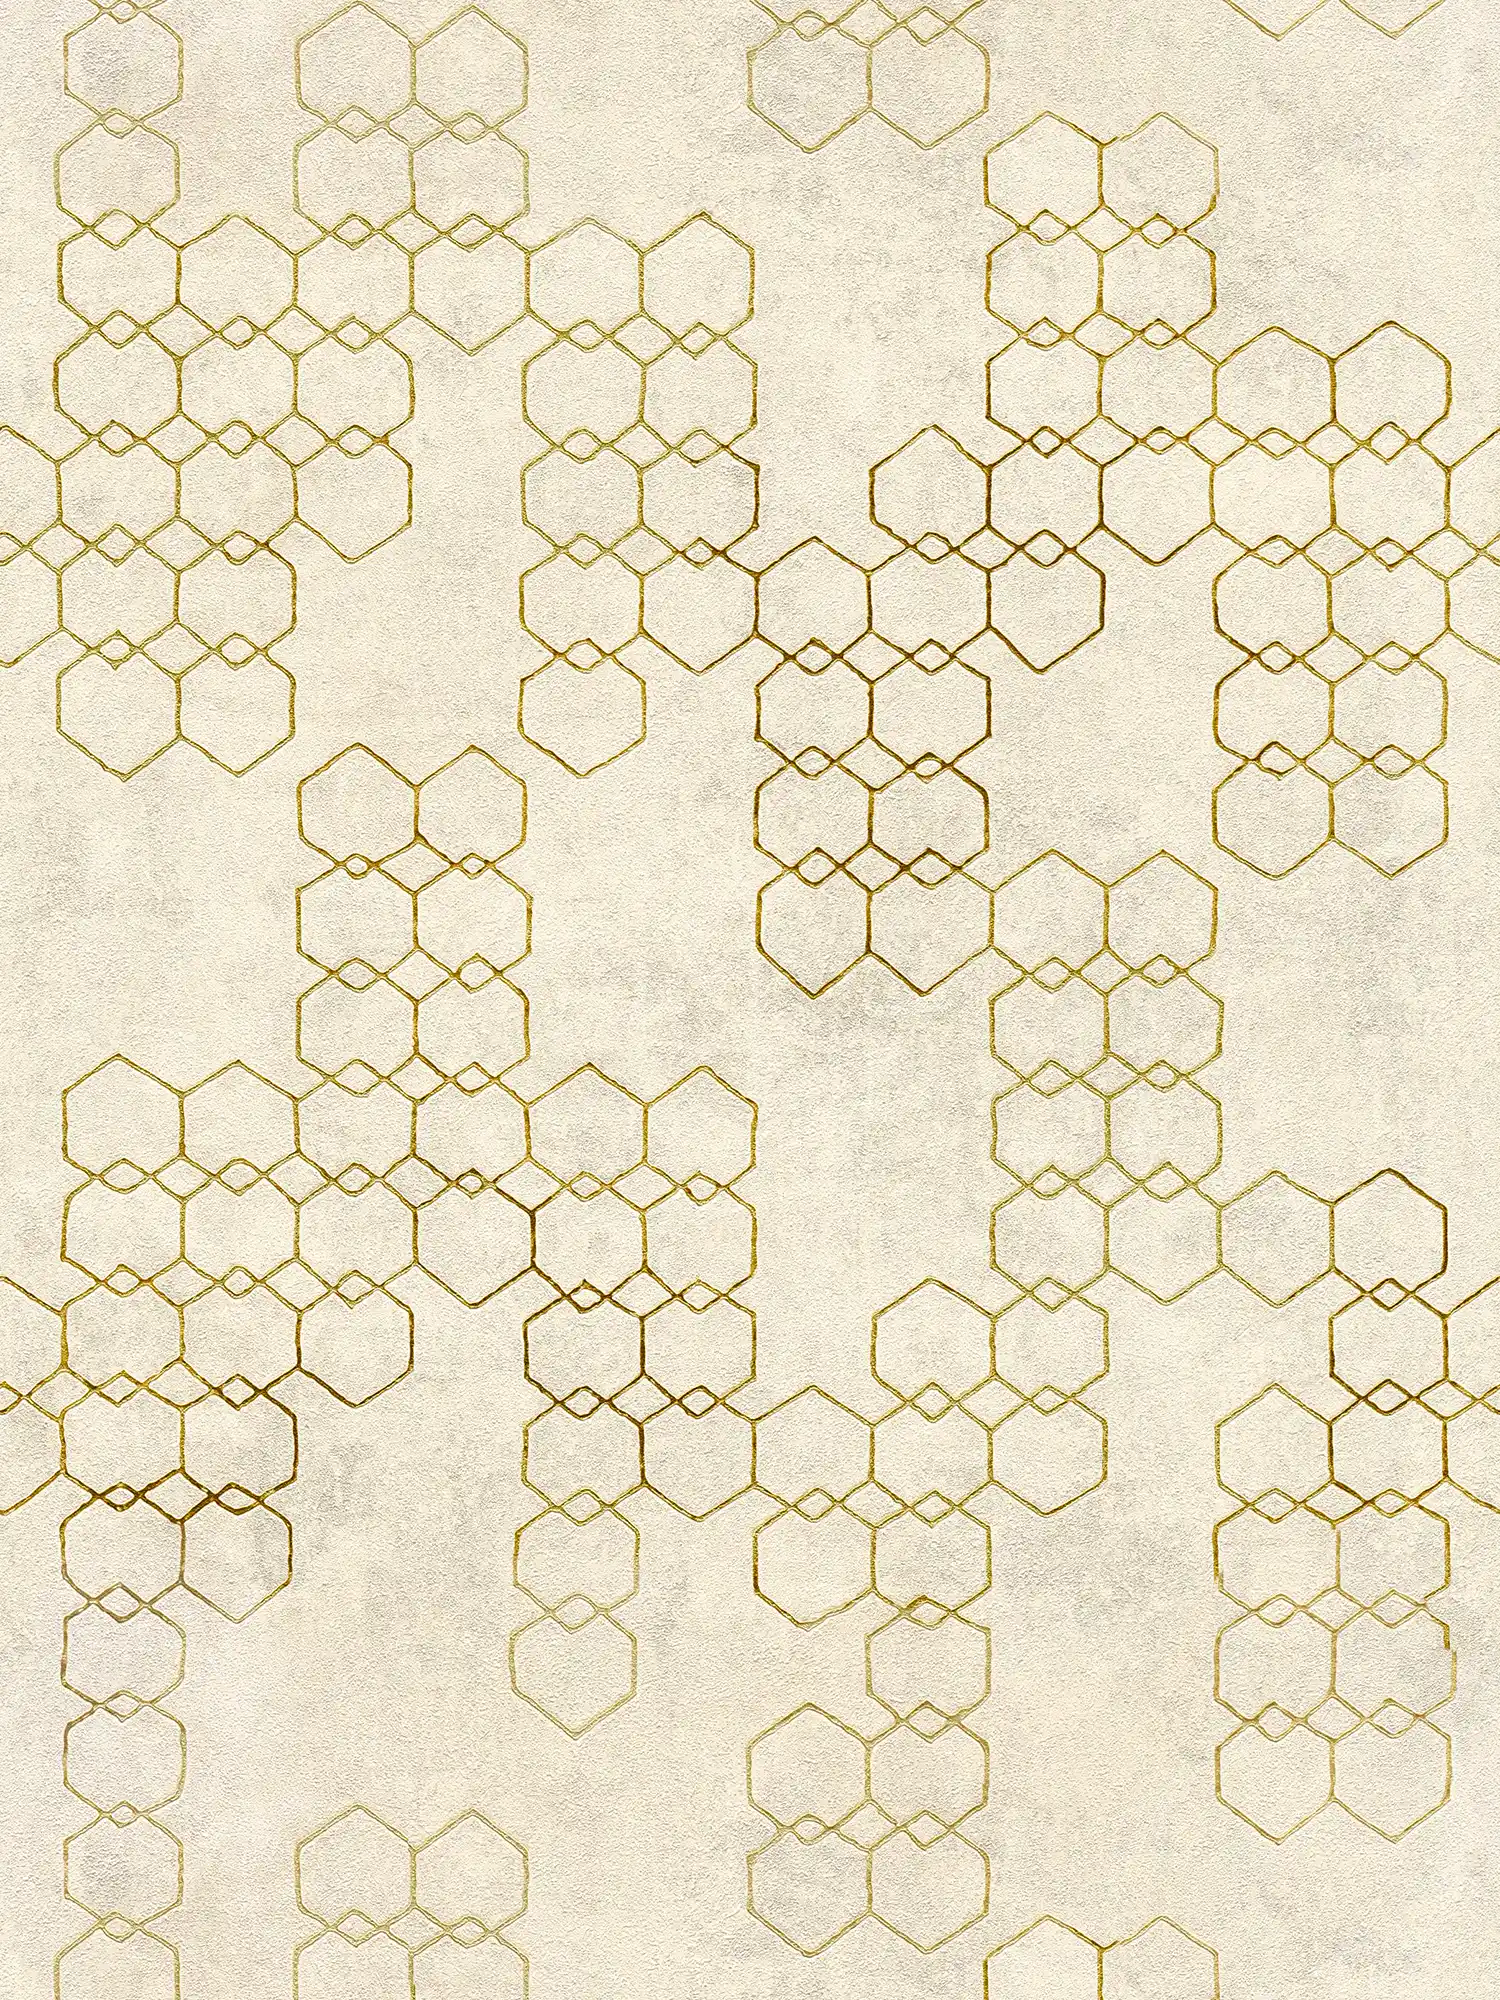 Geometric pattern wallpaper in industrial style - cream, gold, grey
